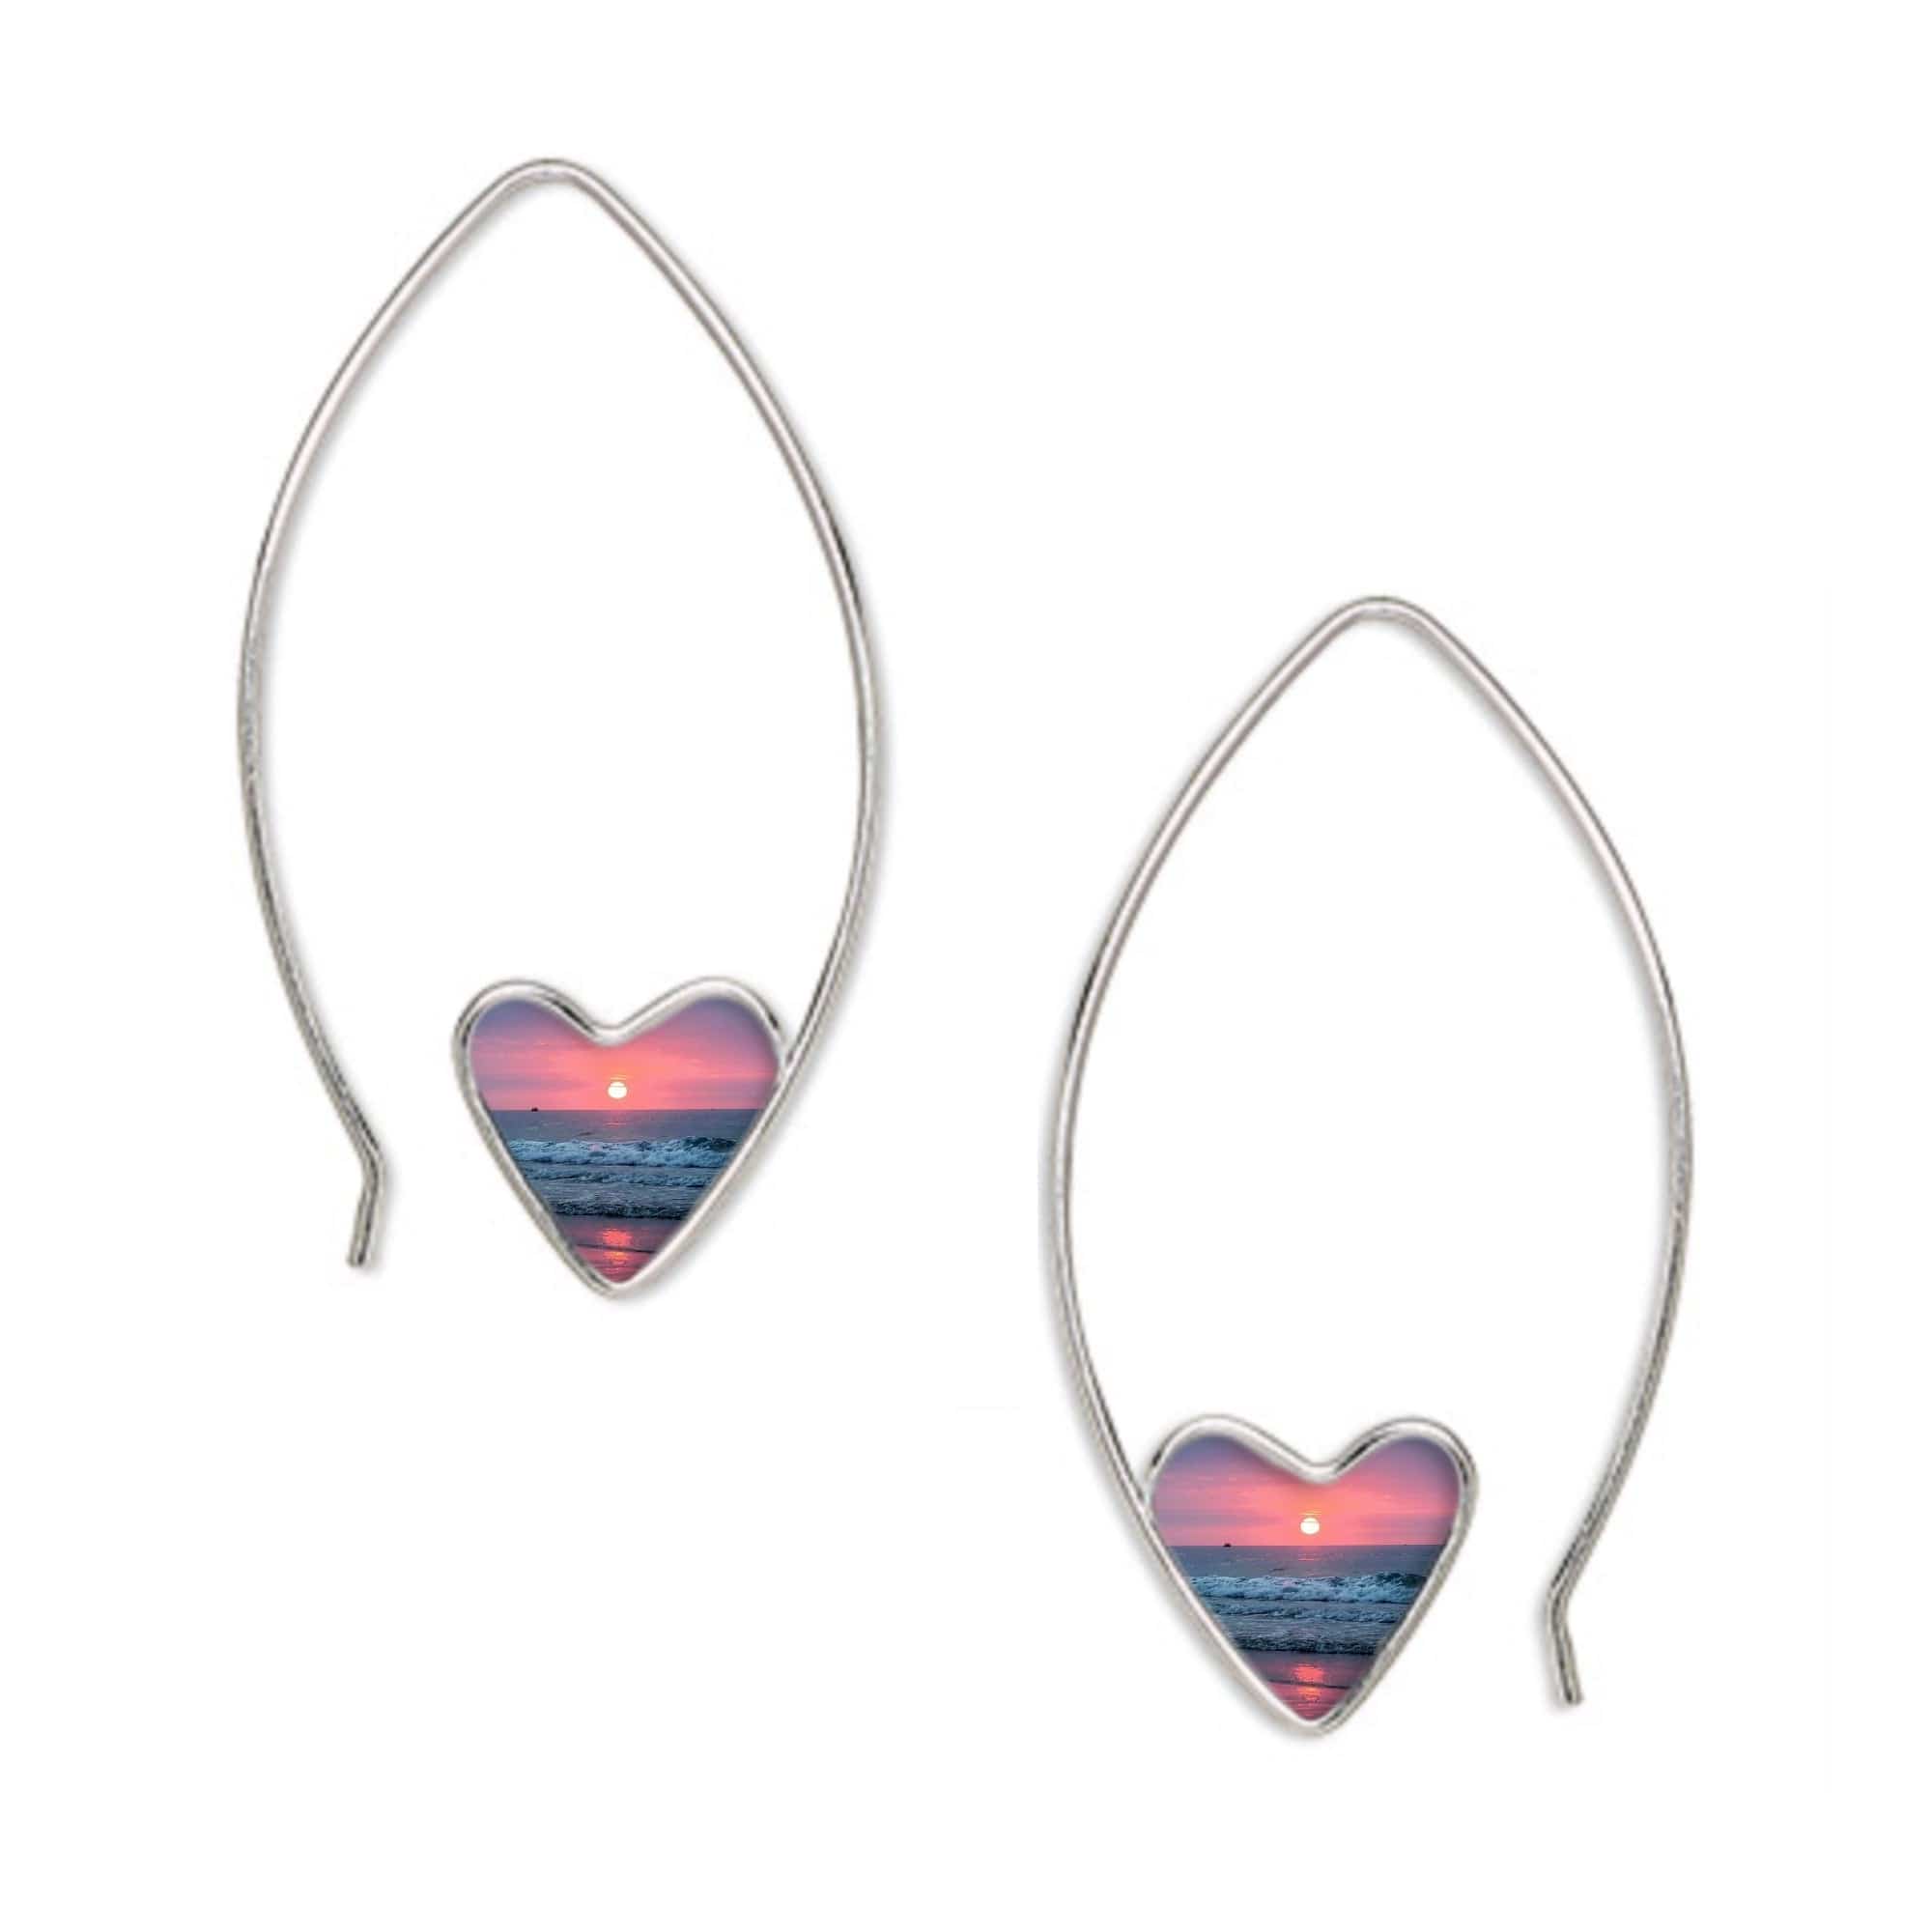 Coastal Maine Sunset Heart Earrings by Kerry Daly